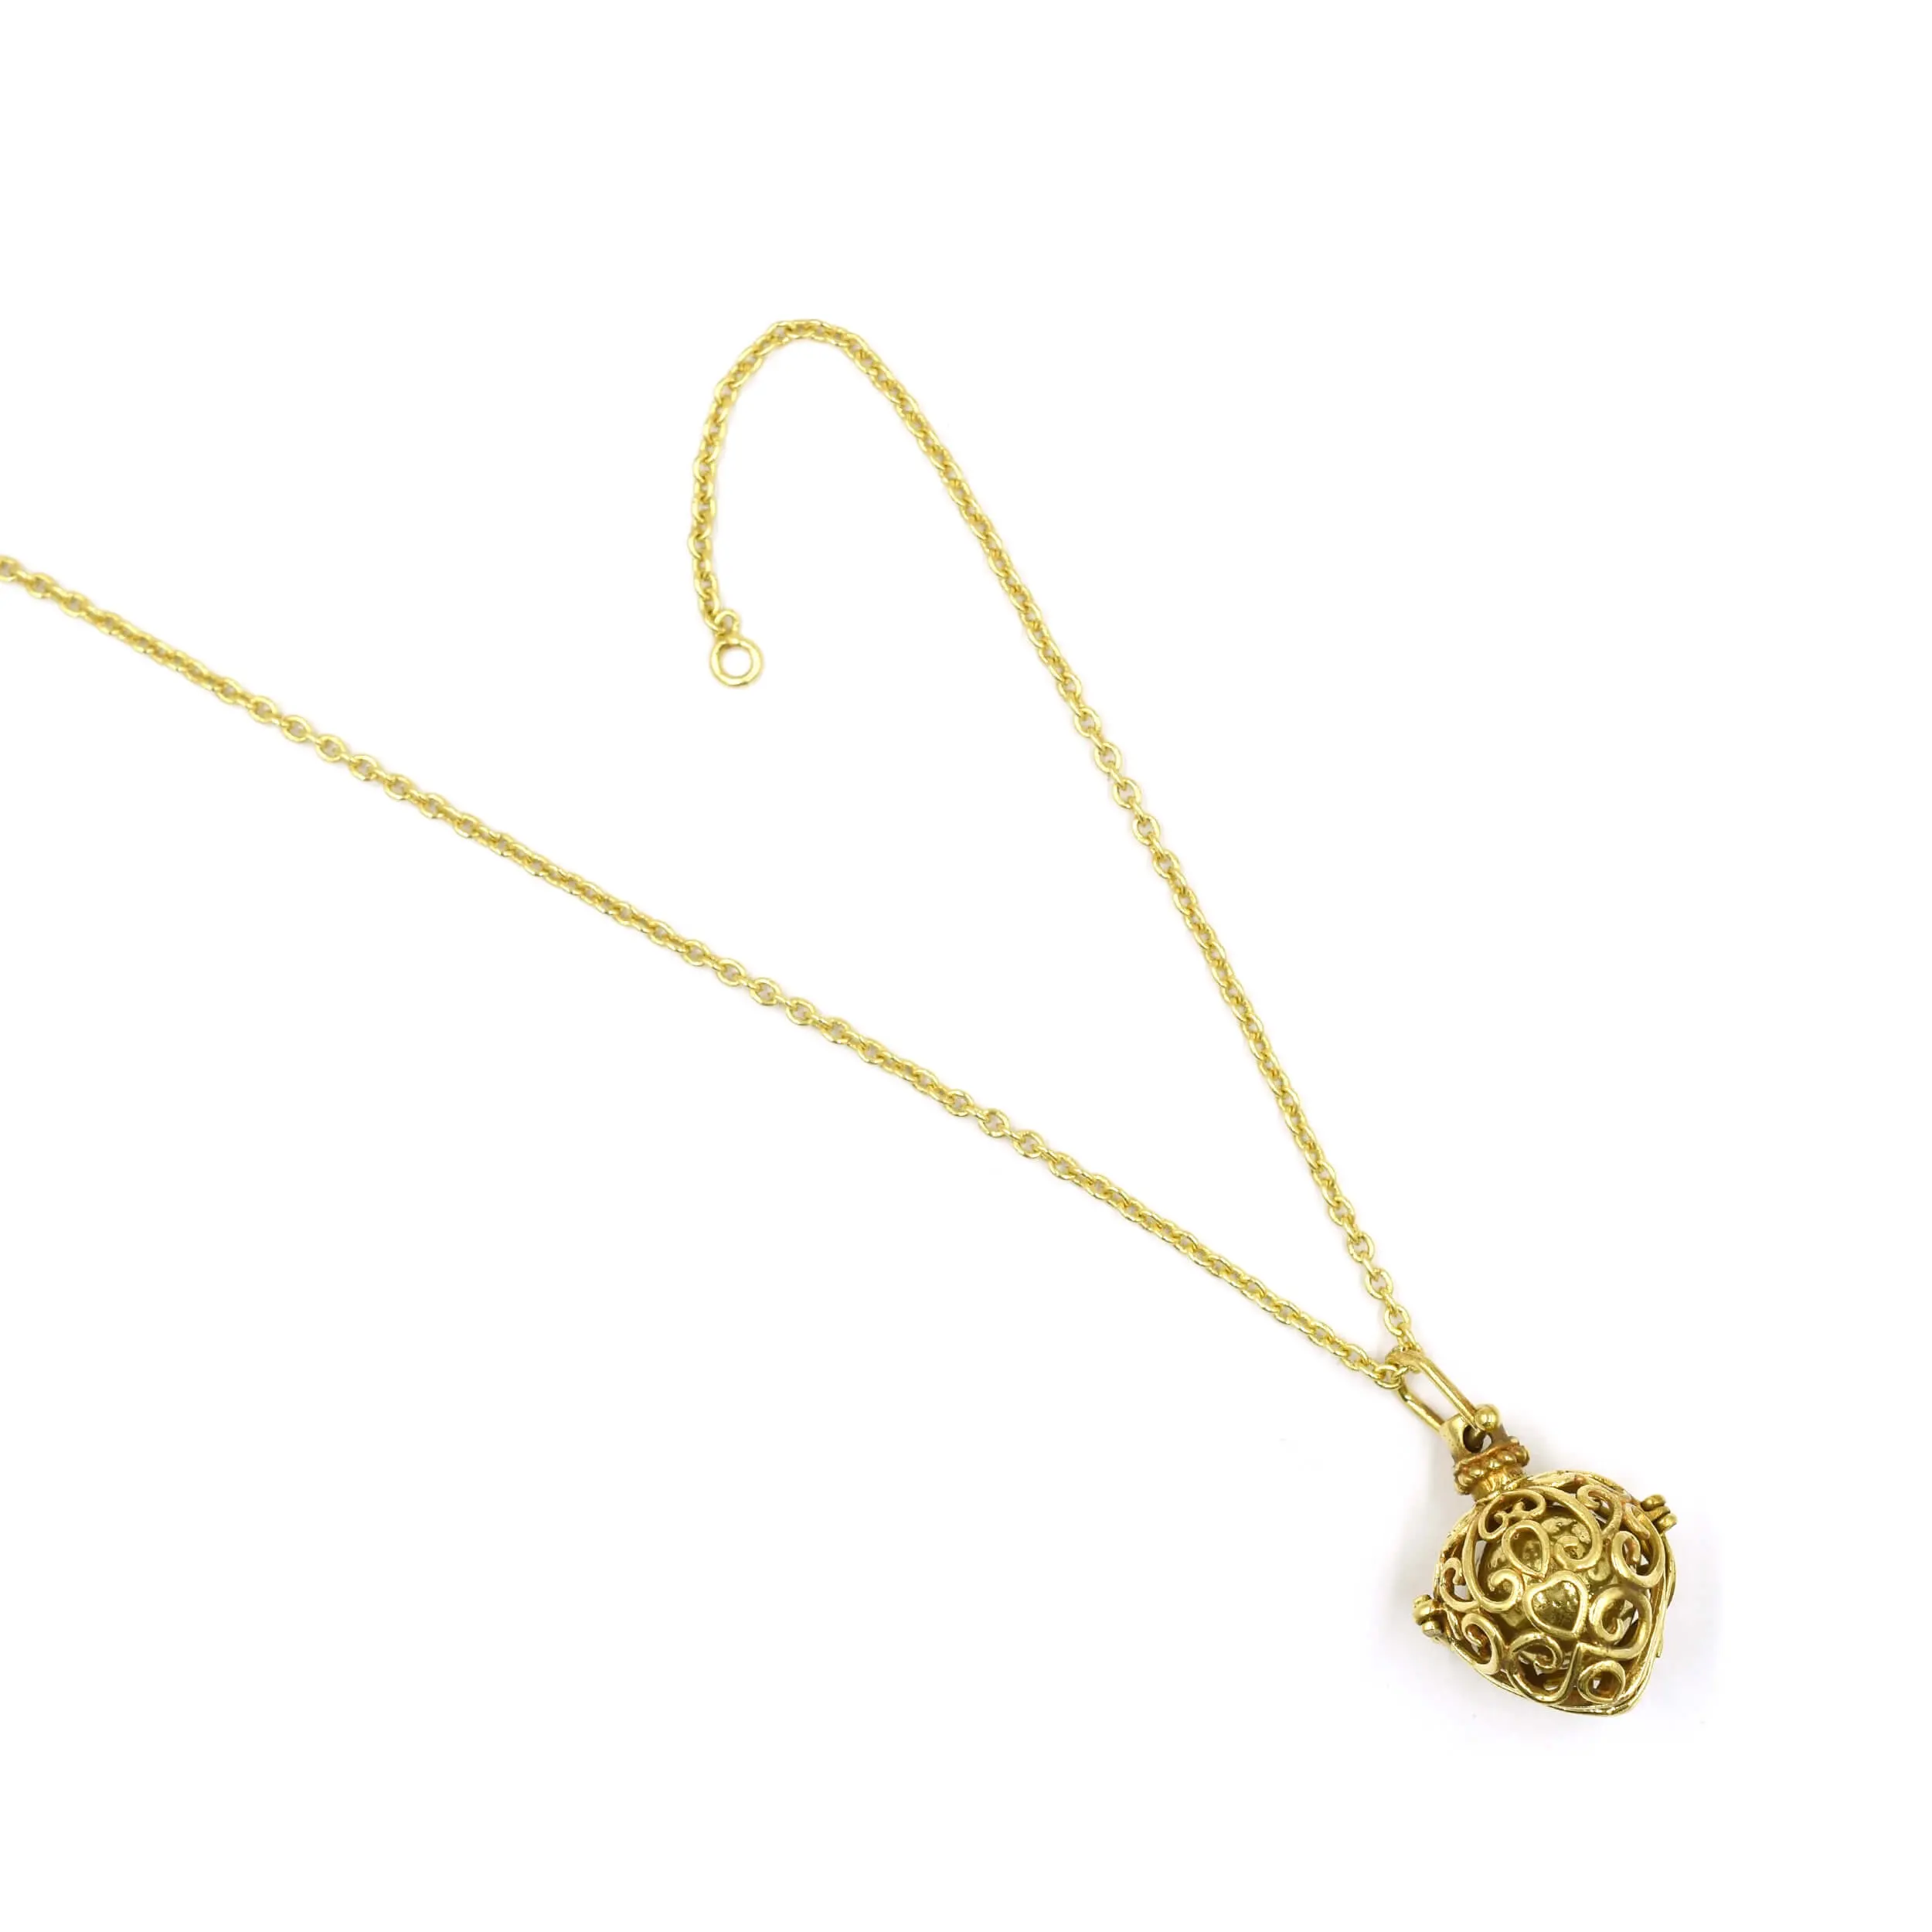 Wonderful necklace open locket music sound heart pendant high finished brass jewelry 18k gold plated waterproof jewelry gift mom